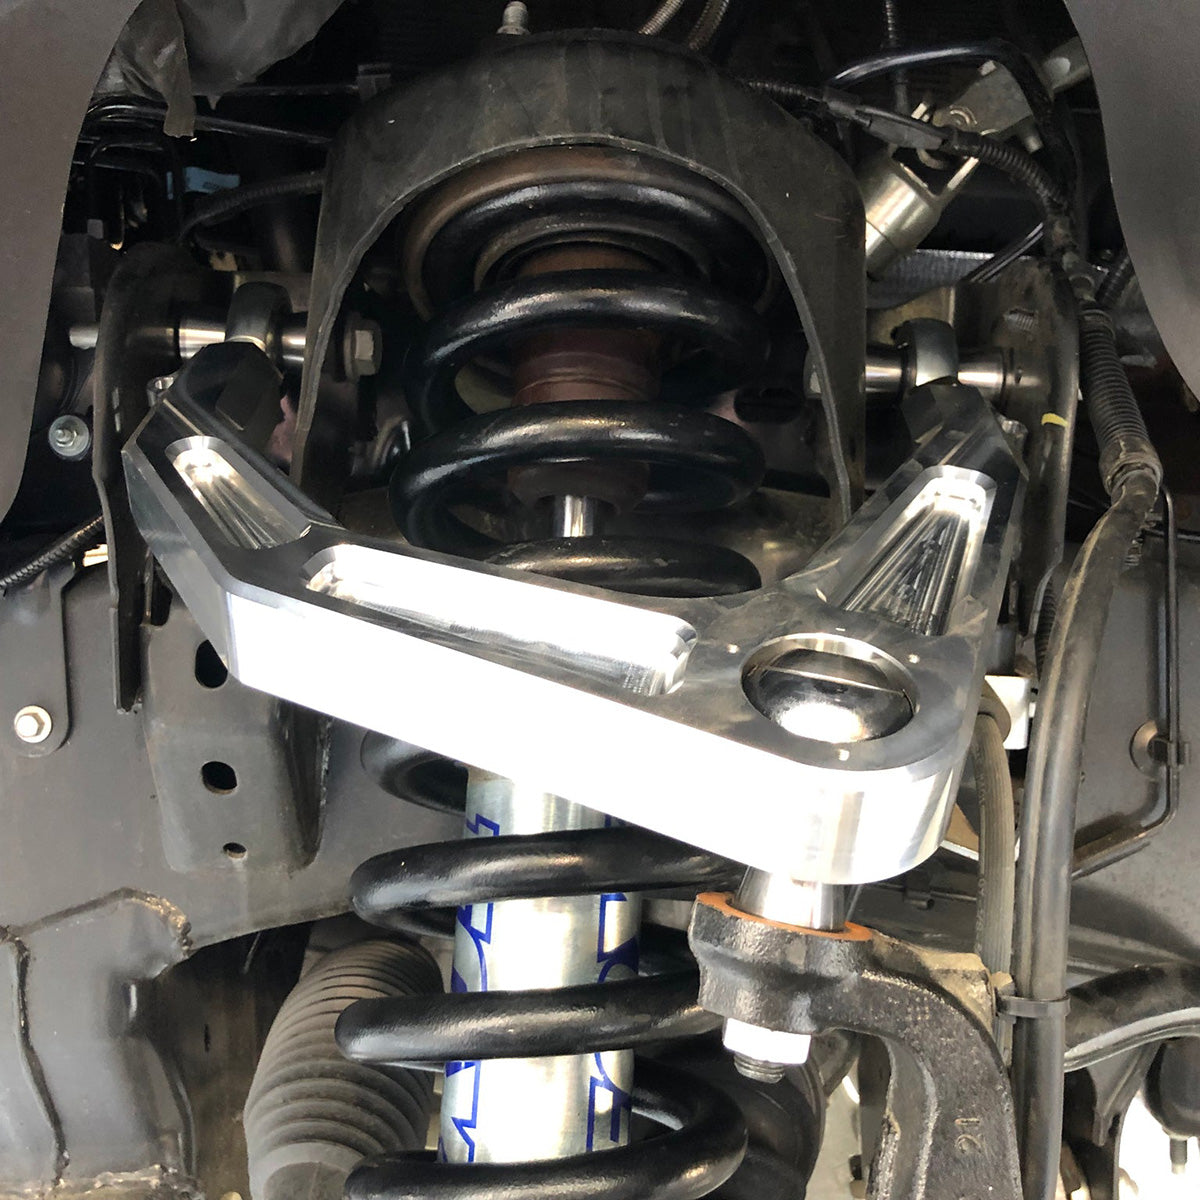 '10-14 Ford Raptor Kibbetech Billet Aluminum Upper Control Arms close-up